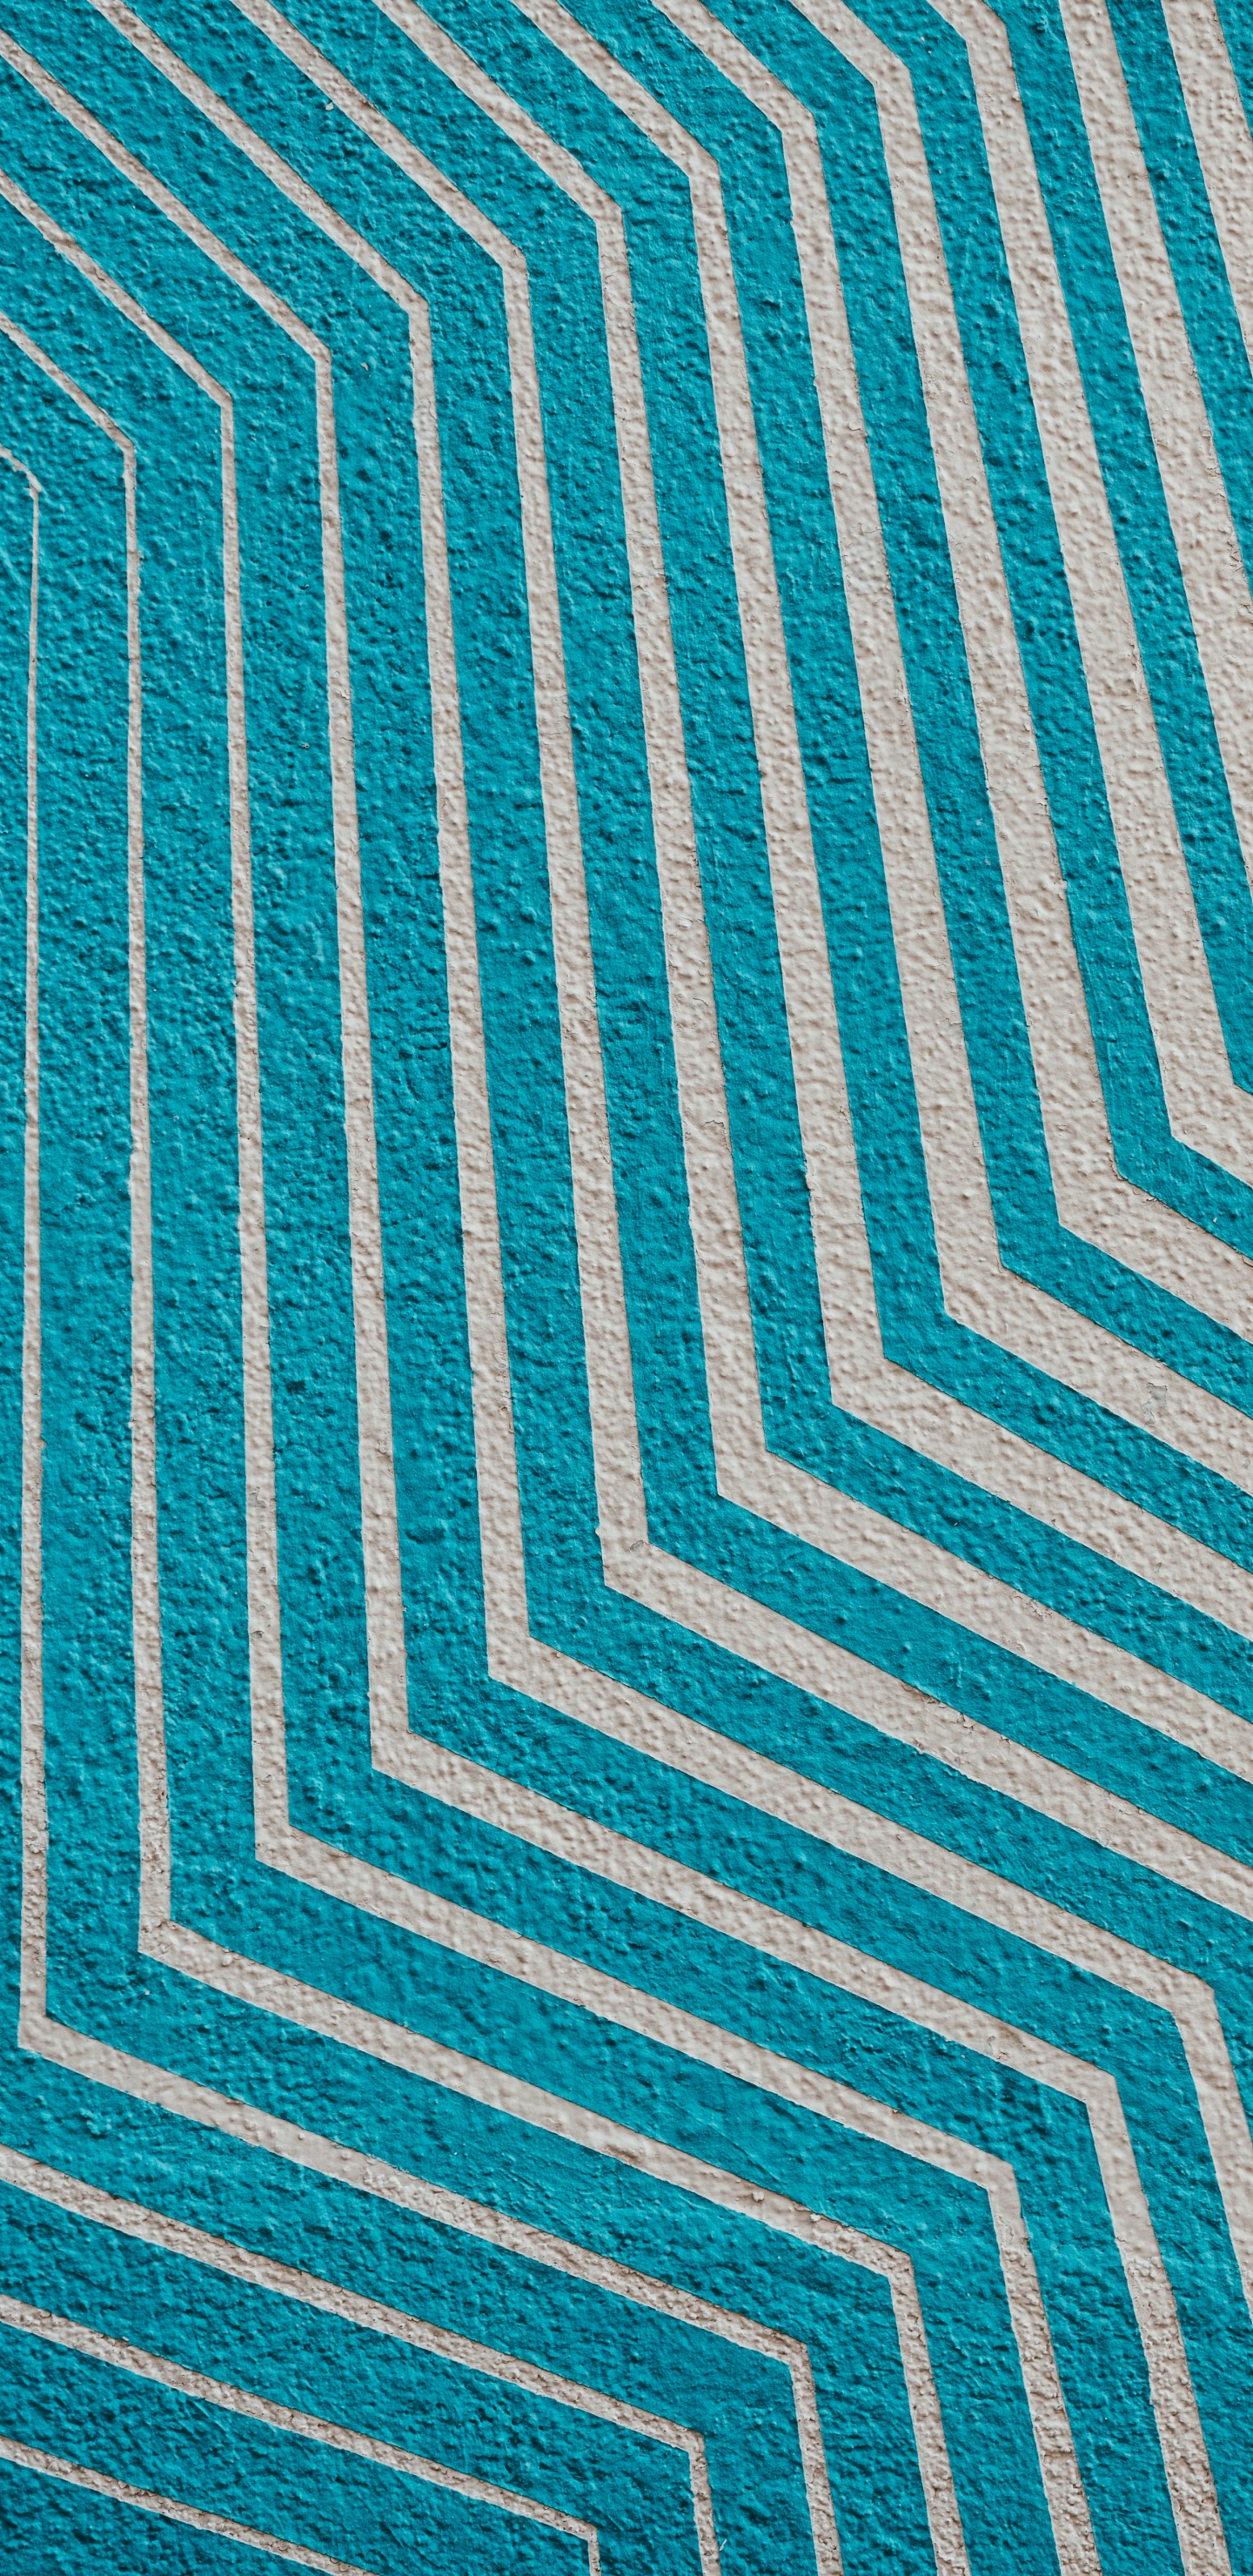 Textil Chevron Azul y Blanco. Wallpaper in 1440x2960 Resolution